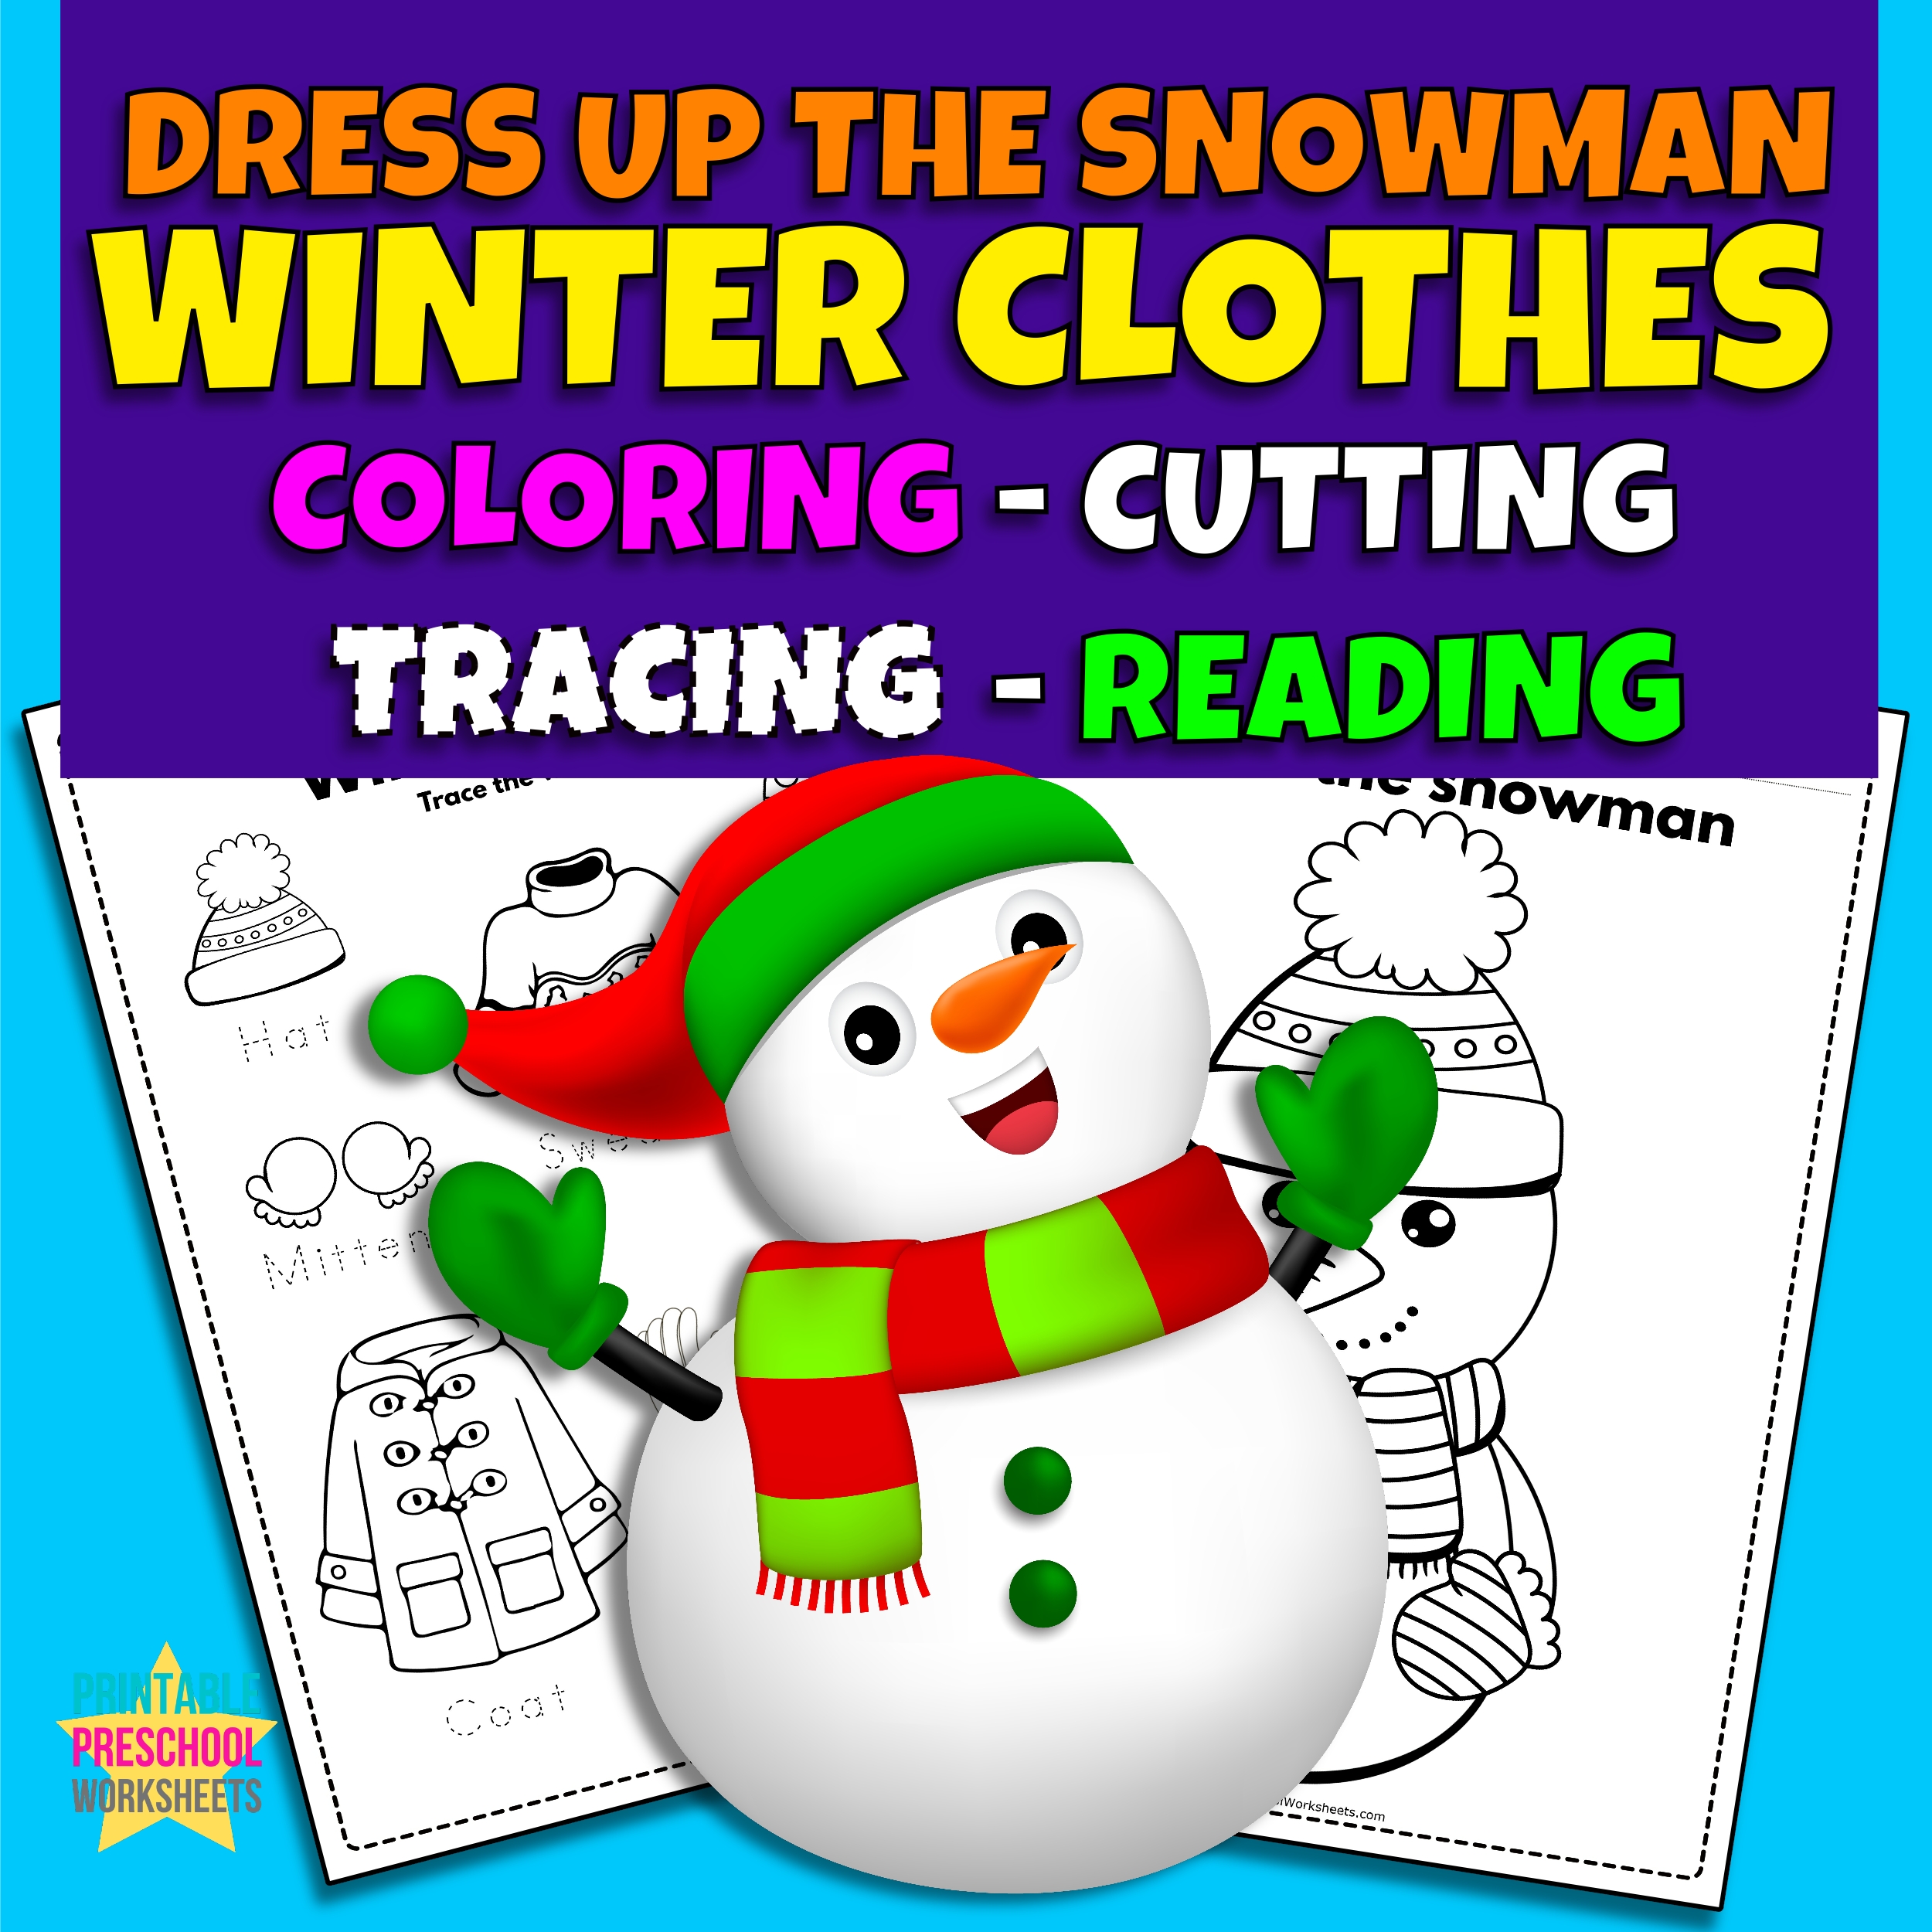 Winter clothes build a snowman coloring